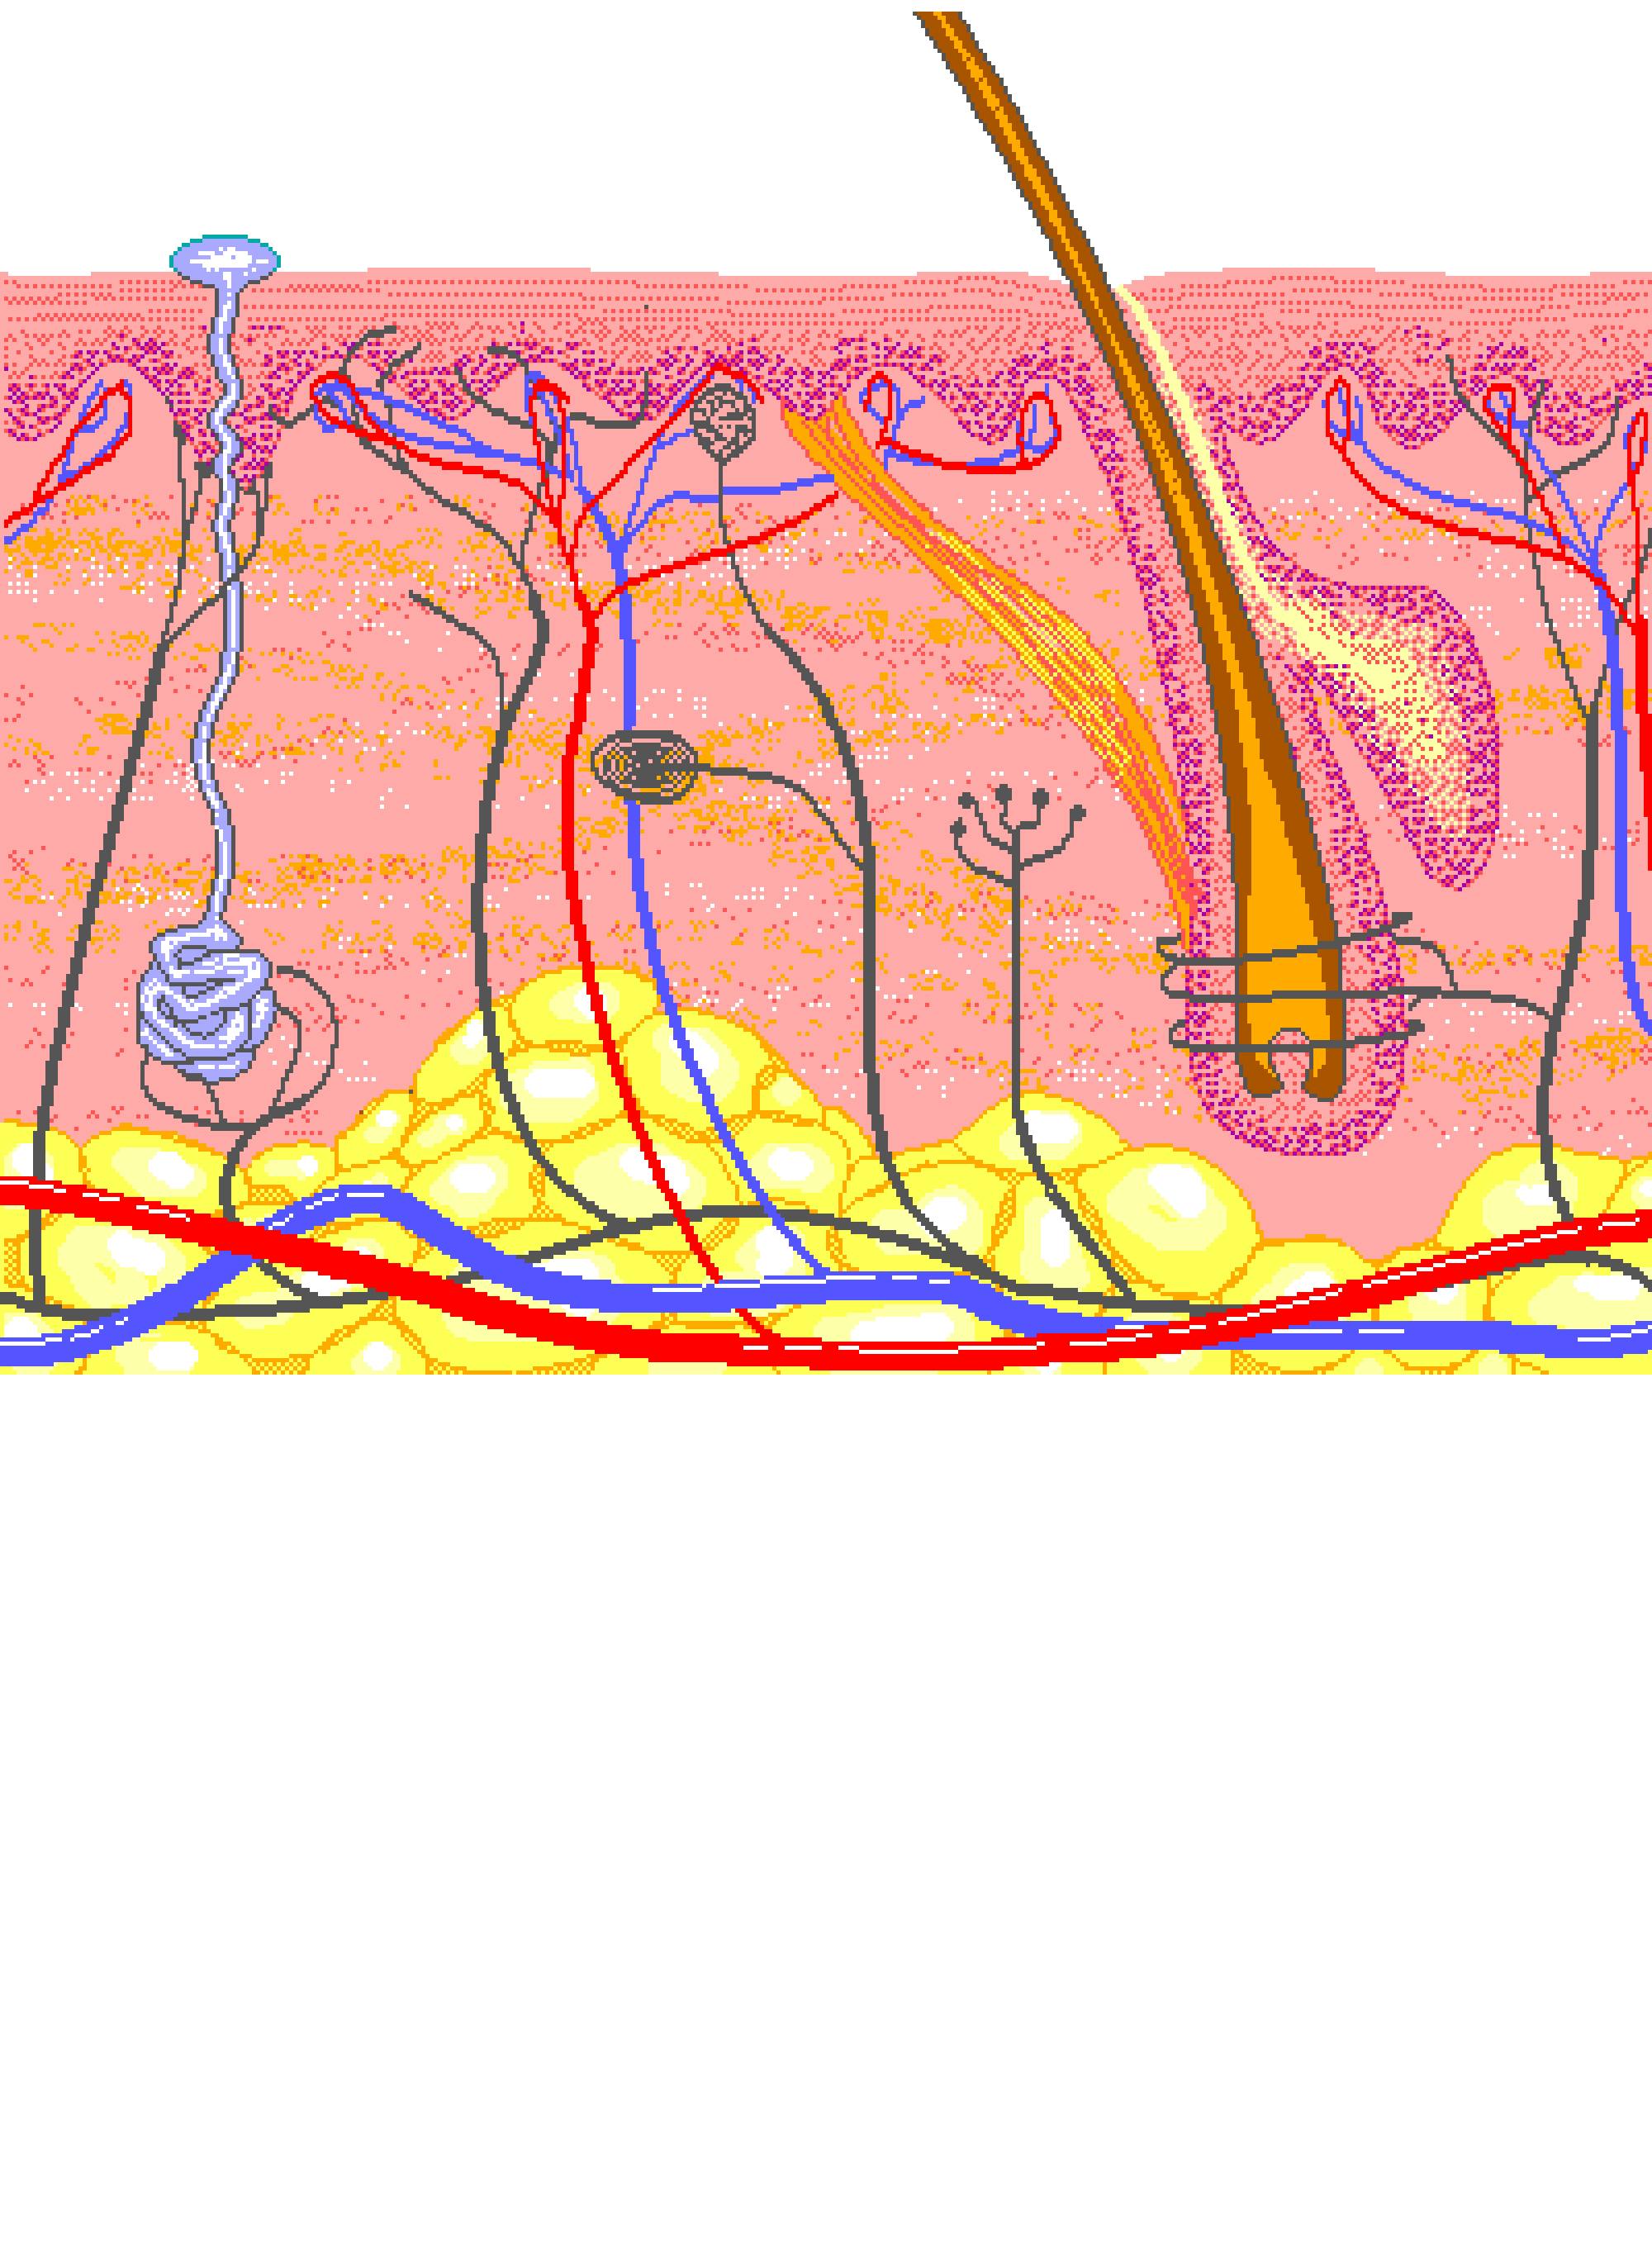 human epidermal cell diagram